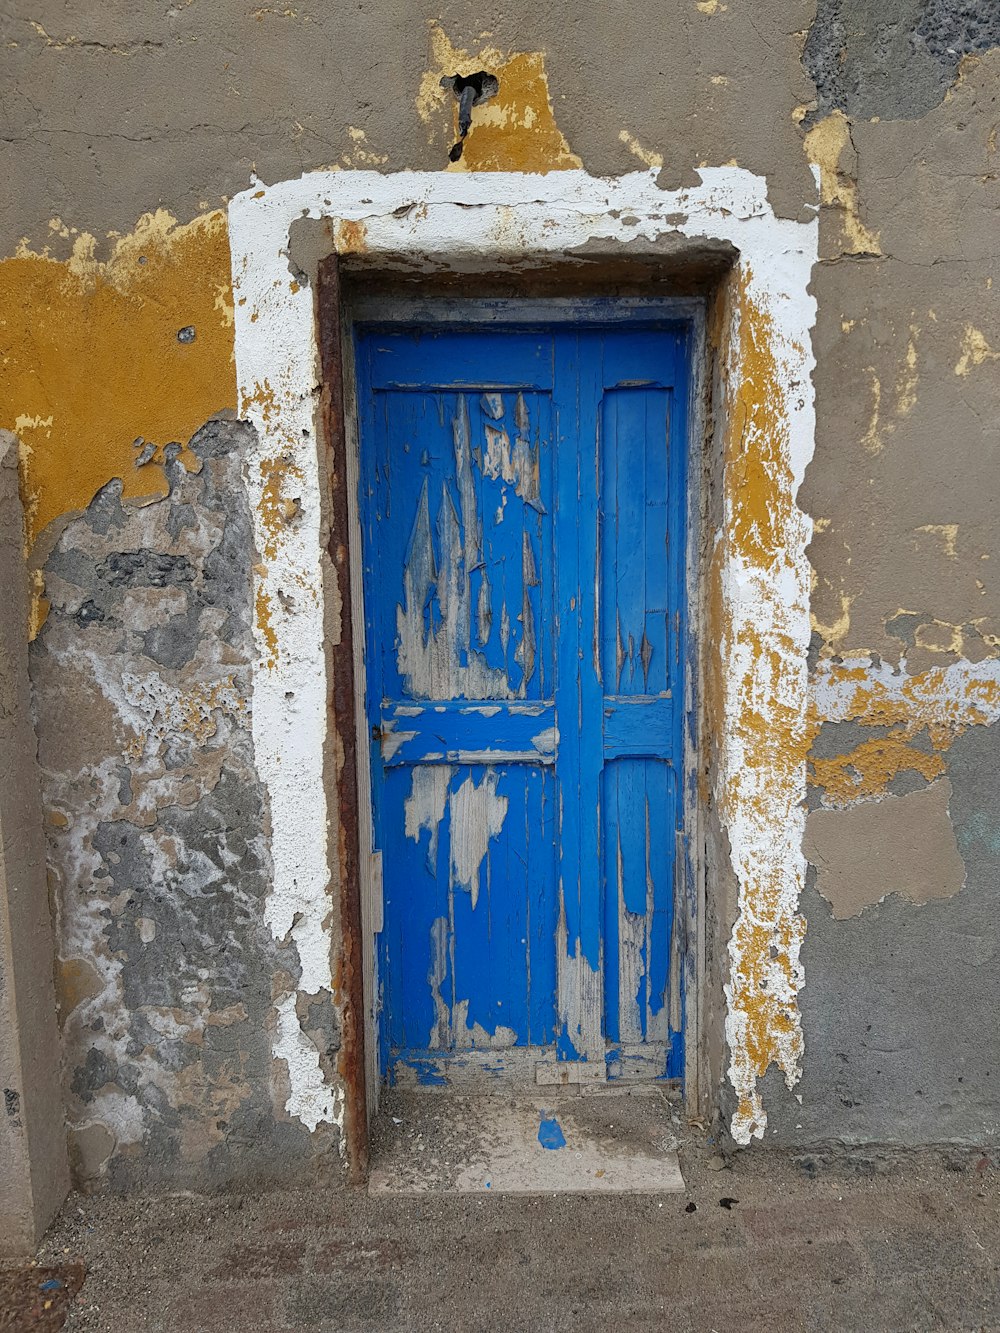 a blue door is in an old building